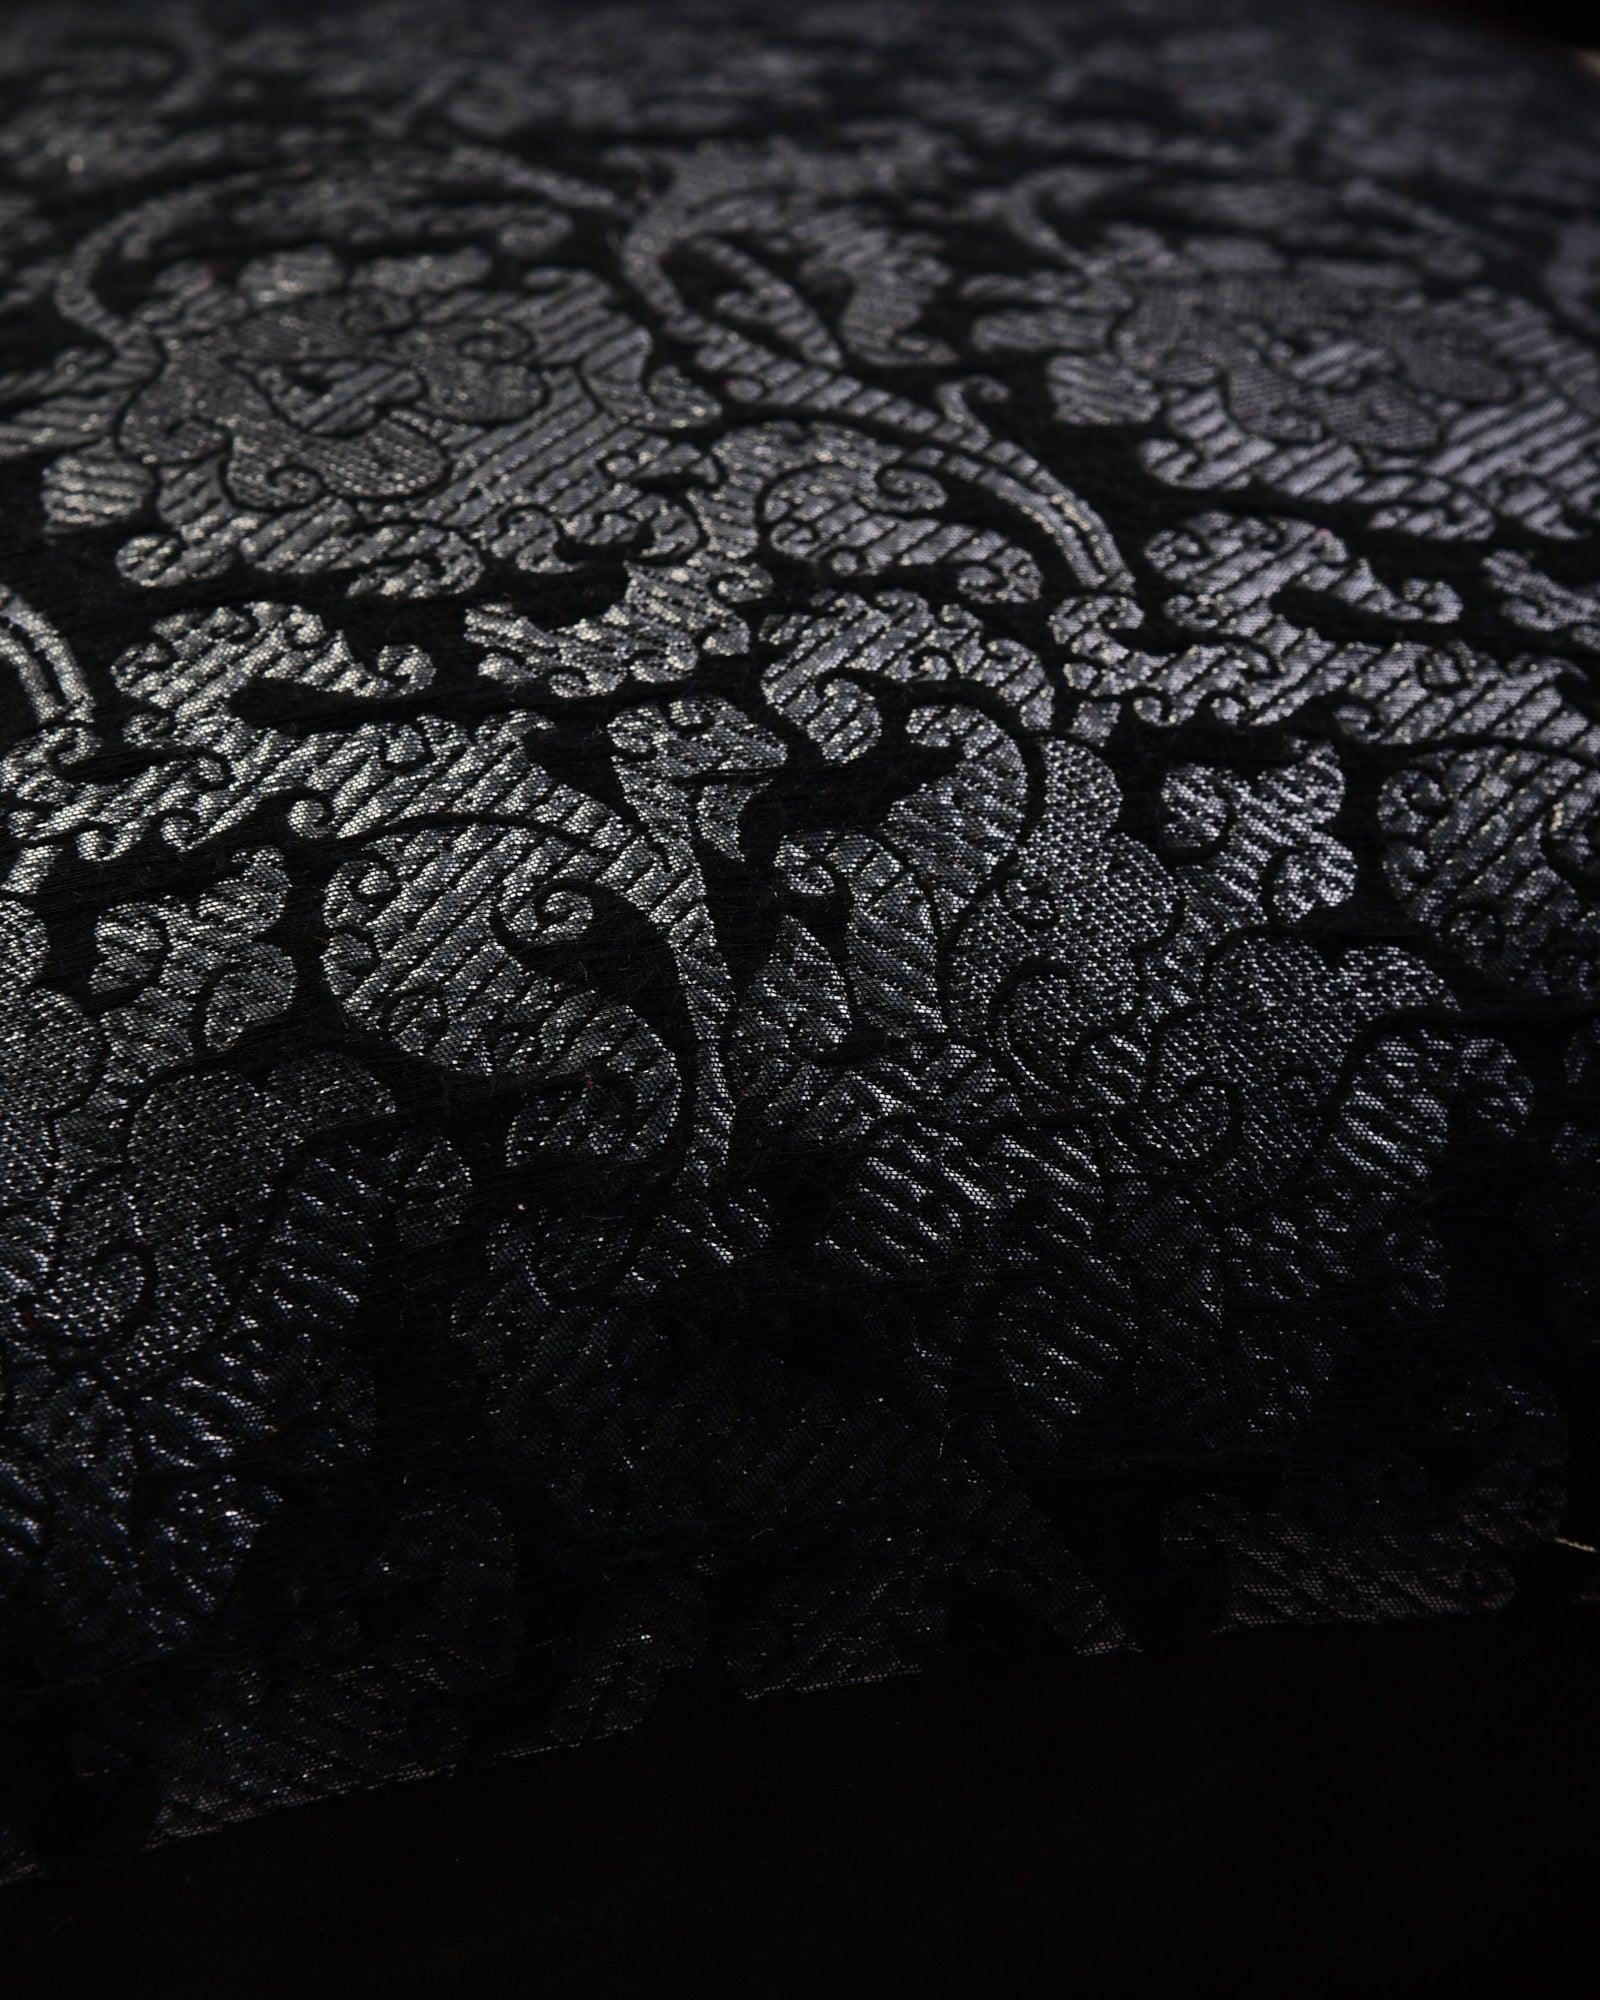 Black Handloom Lurex Damask Cotton Cushion Cover 16" - By HolyWeaves, Benares